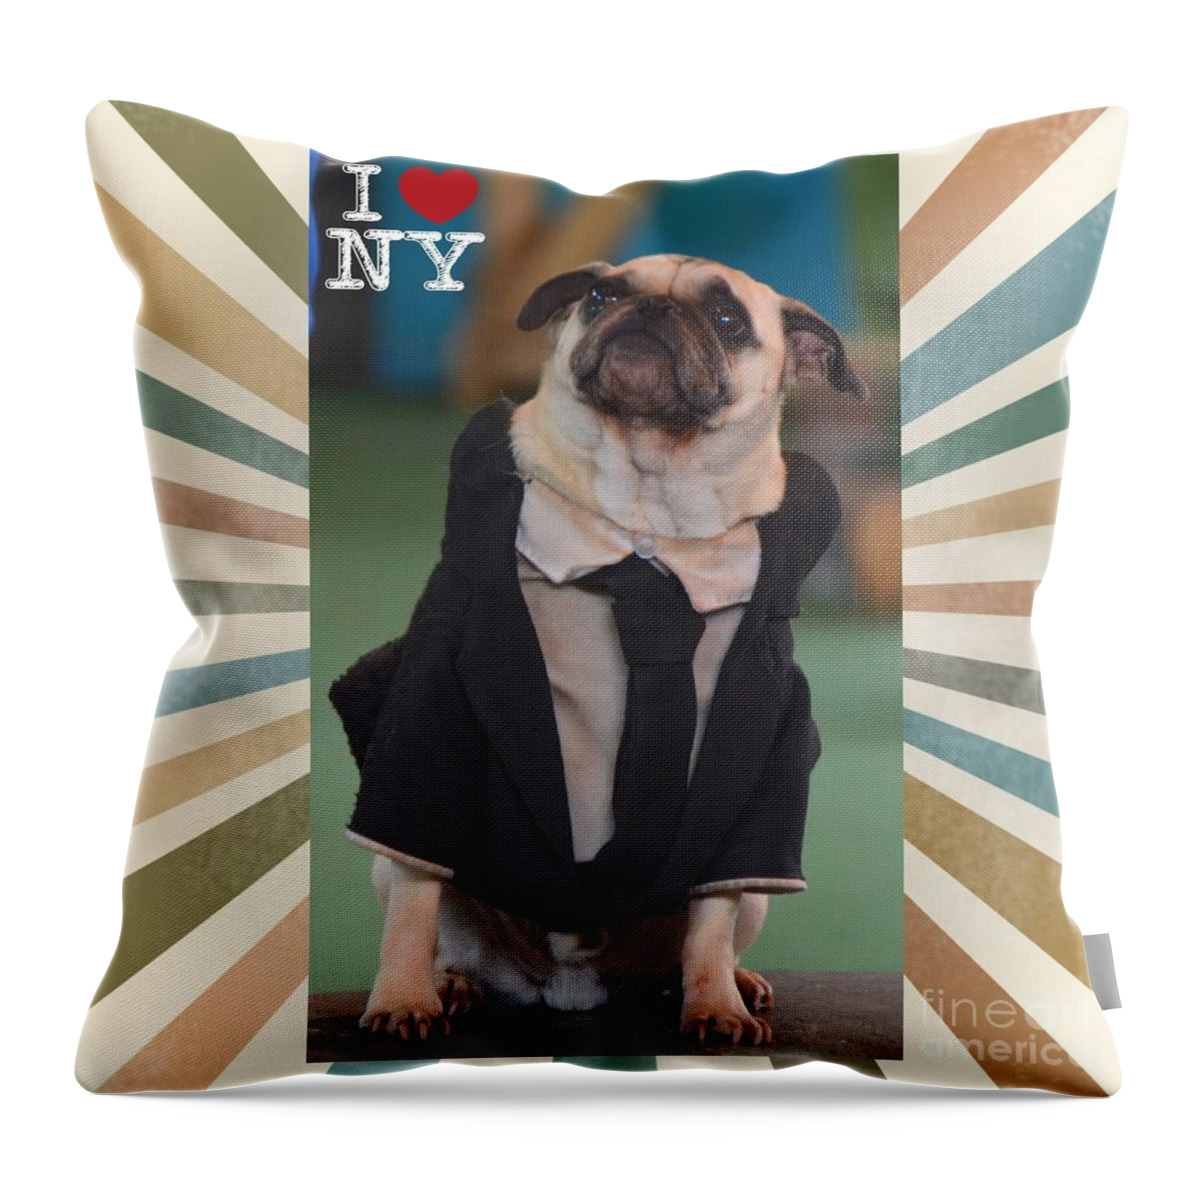 Pug Throw Pillow featuring the digital art New Yorker Pug by Rev Richard W Burdett